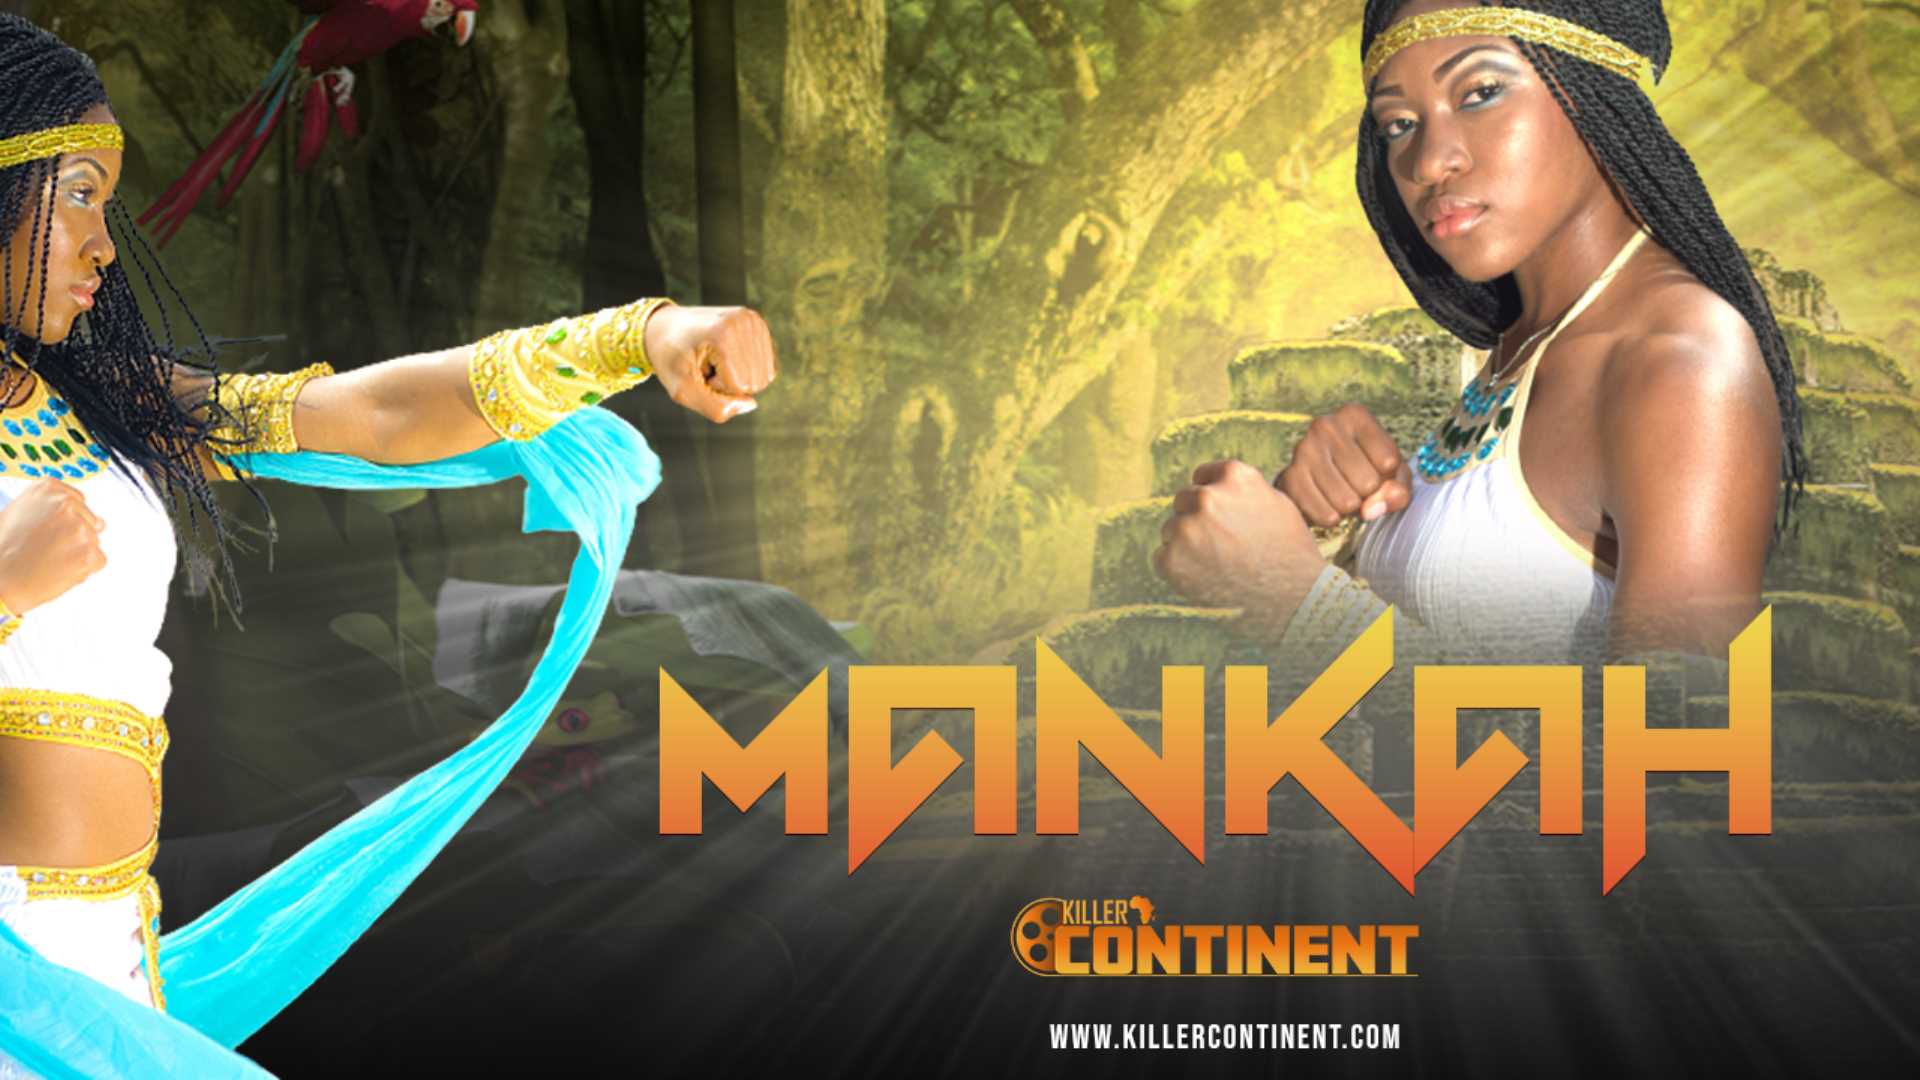 KillerContinent | Killer Continent | MANKAH